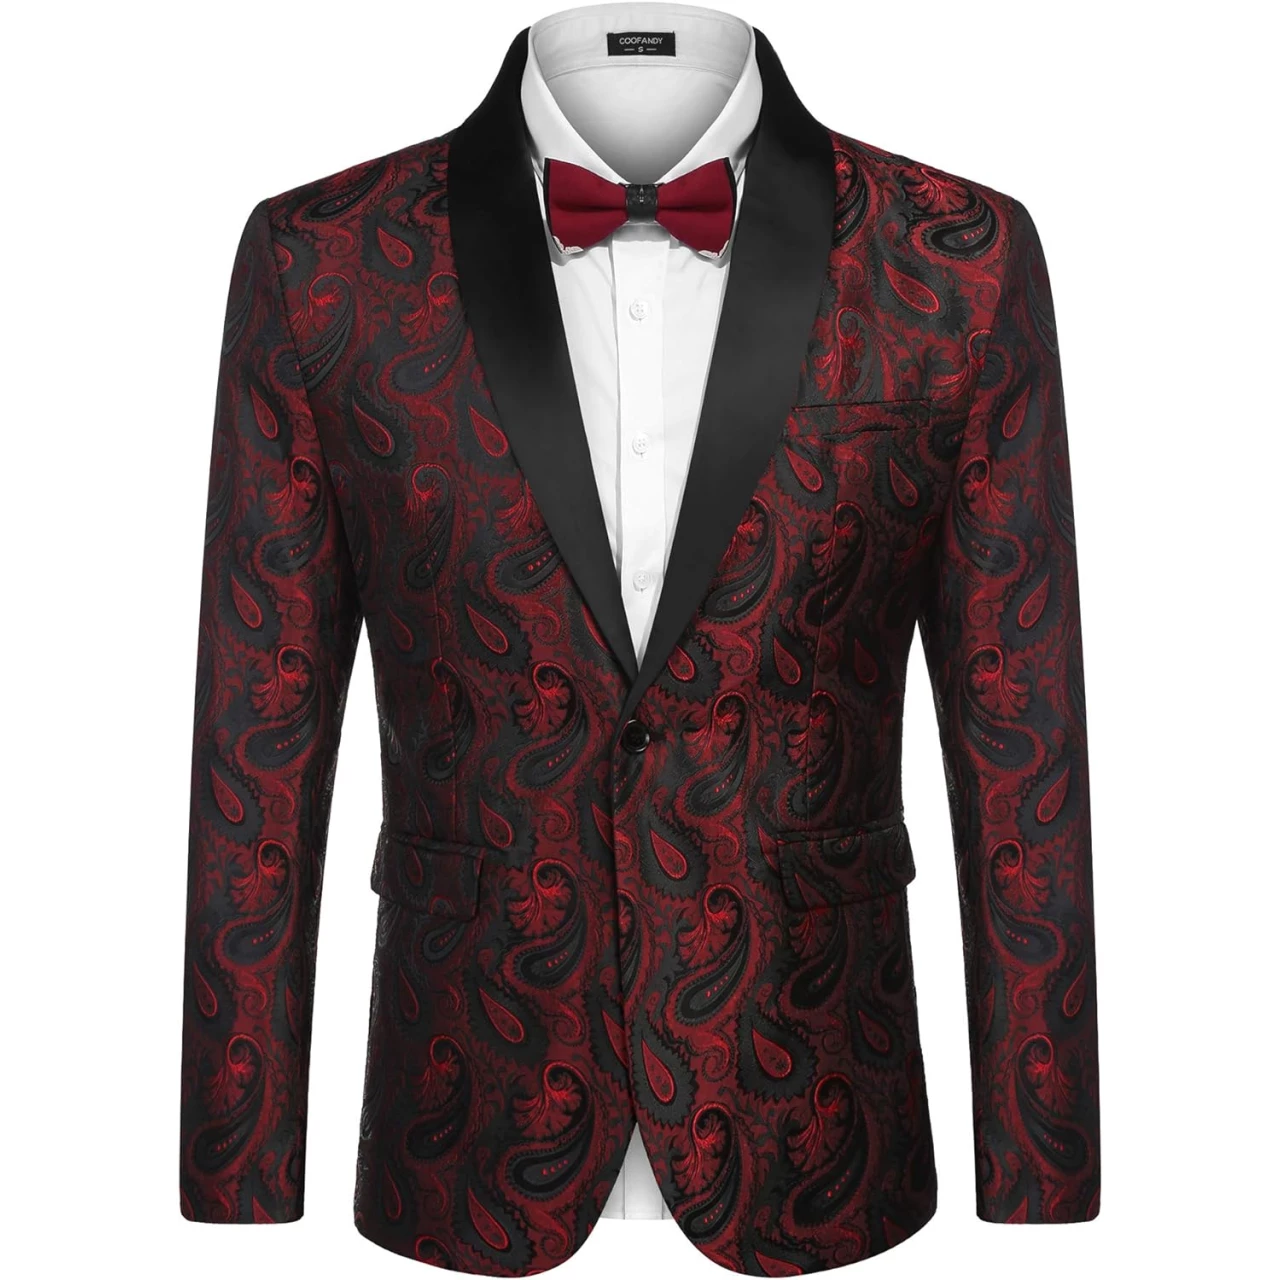 COOFANDY Mens Floral Tuxedo Jacket Paisley Shawl Lapel Suit Blazer Jacket for Dinner,Prom,Wedding